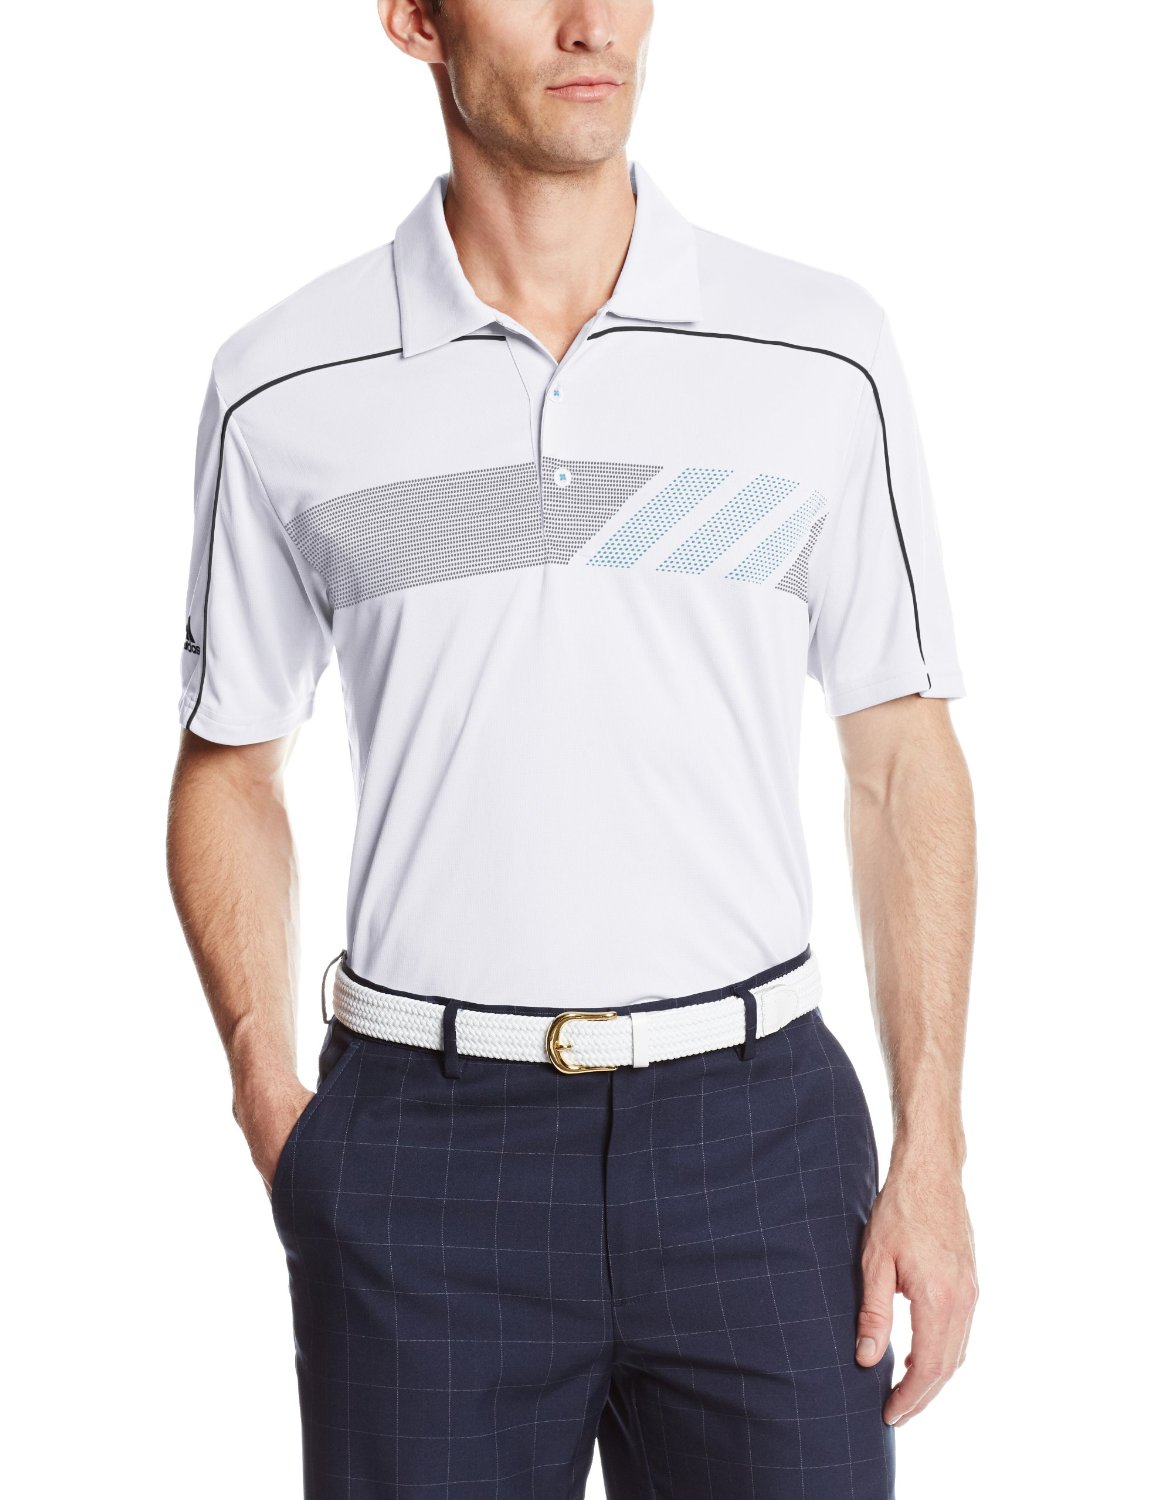 Adidas Mens Climachill Print Golf Polo Shirts